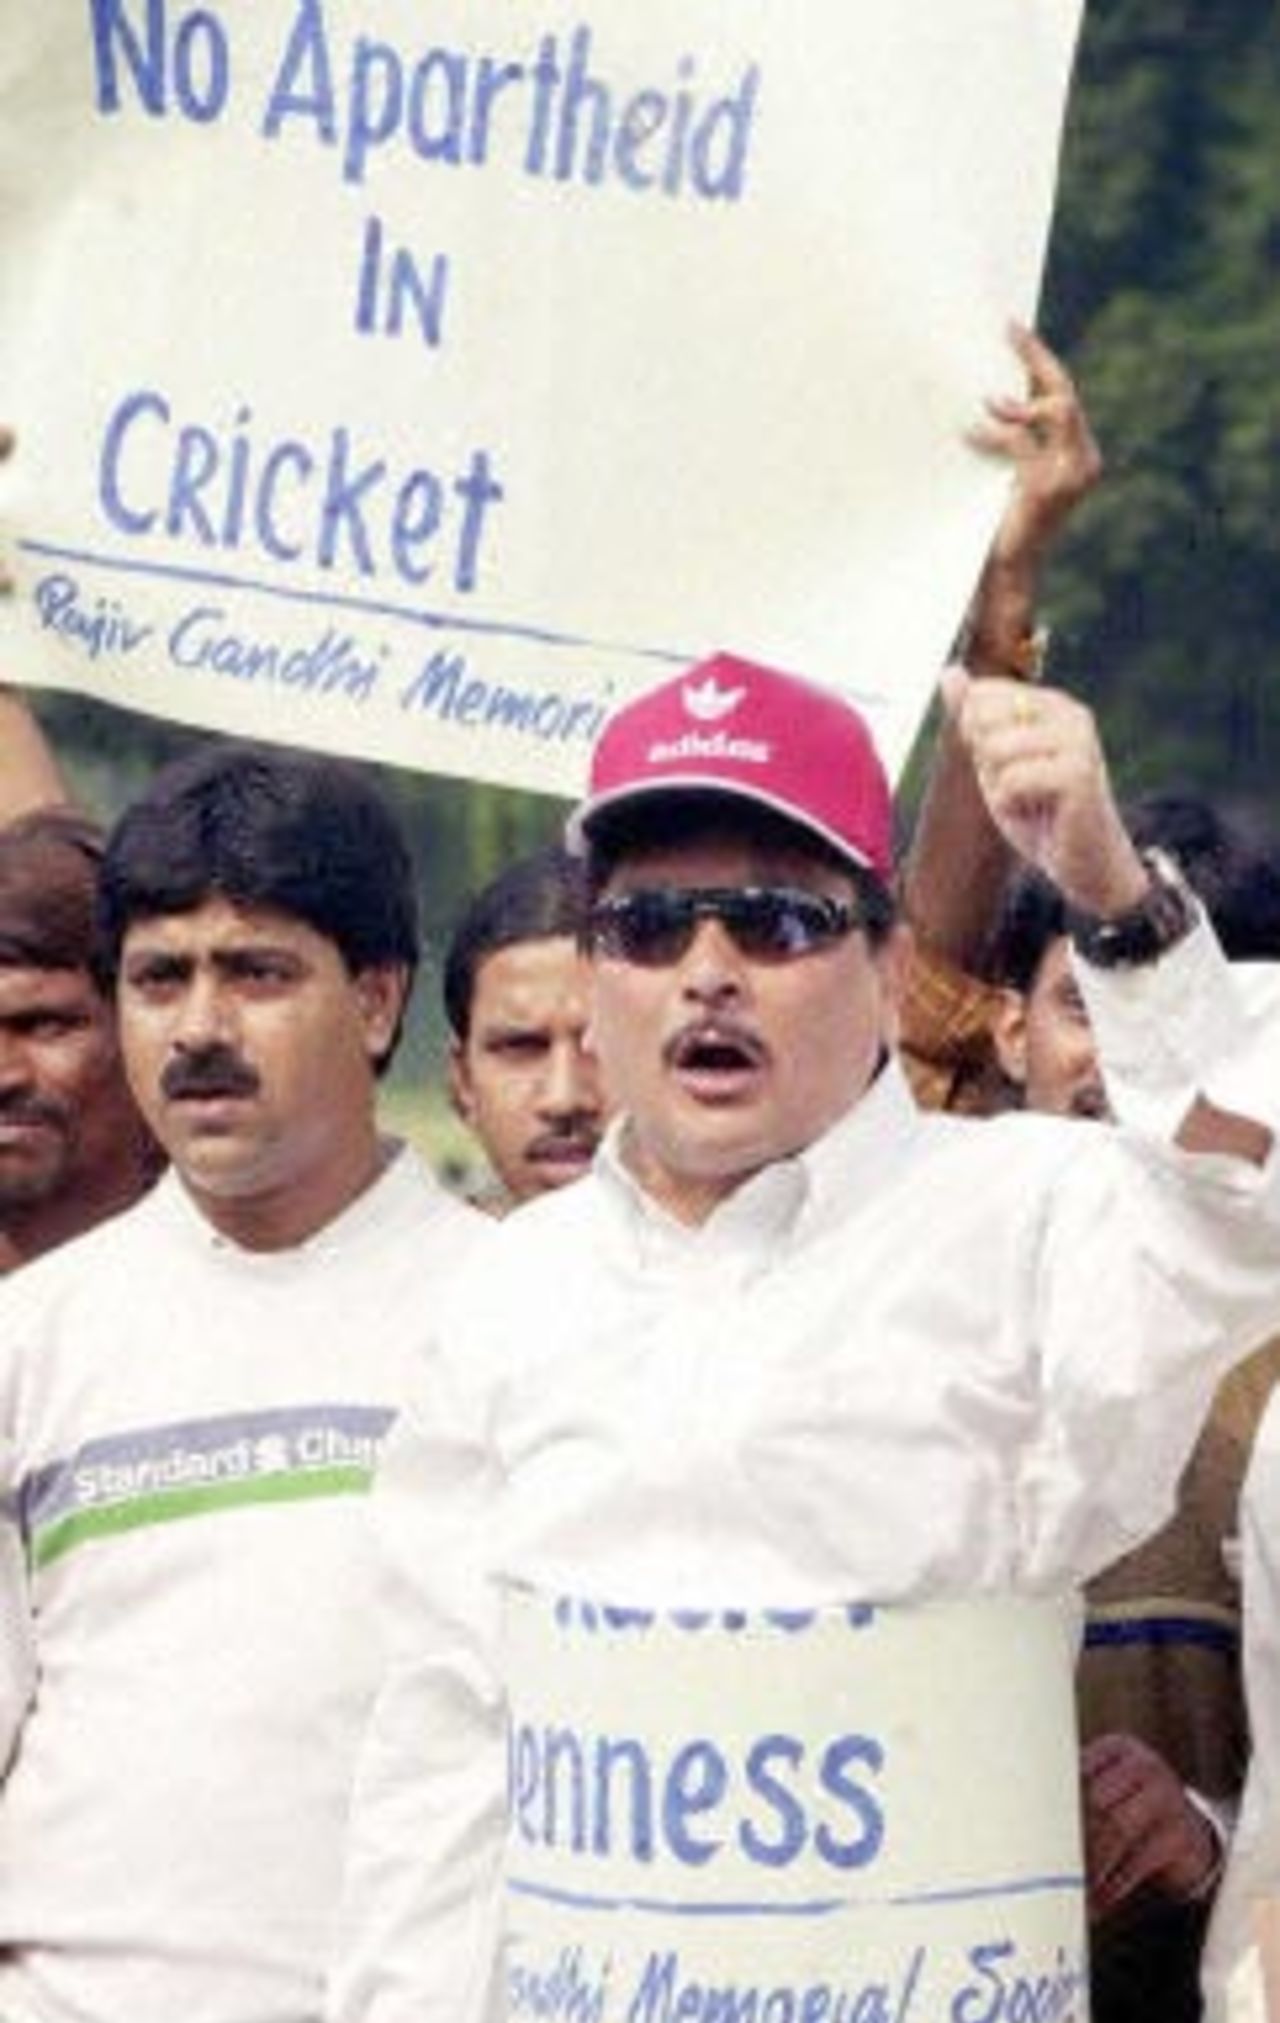 Protestors in Kolkata criticise the judgements of Mike Denness, November 20, 2001